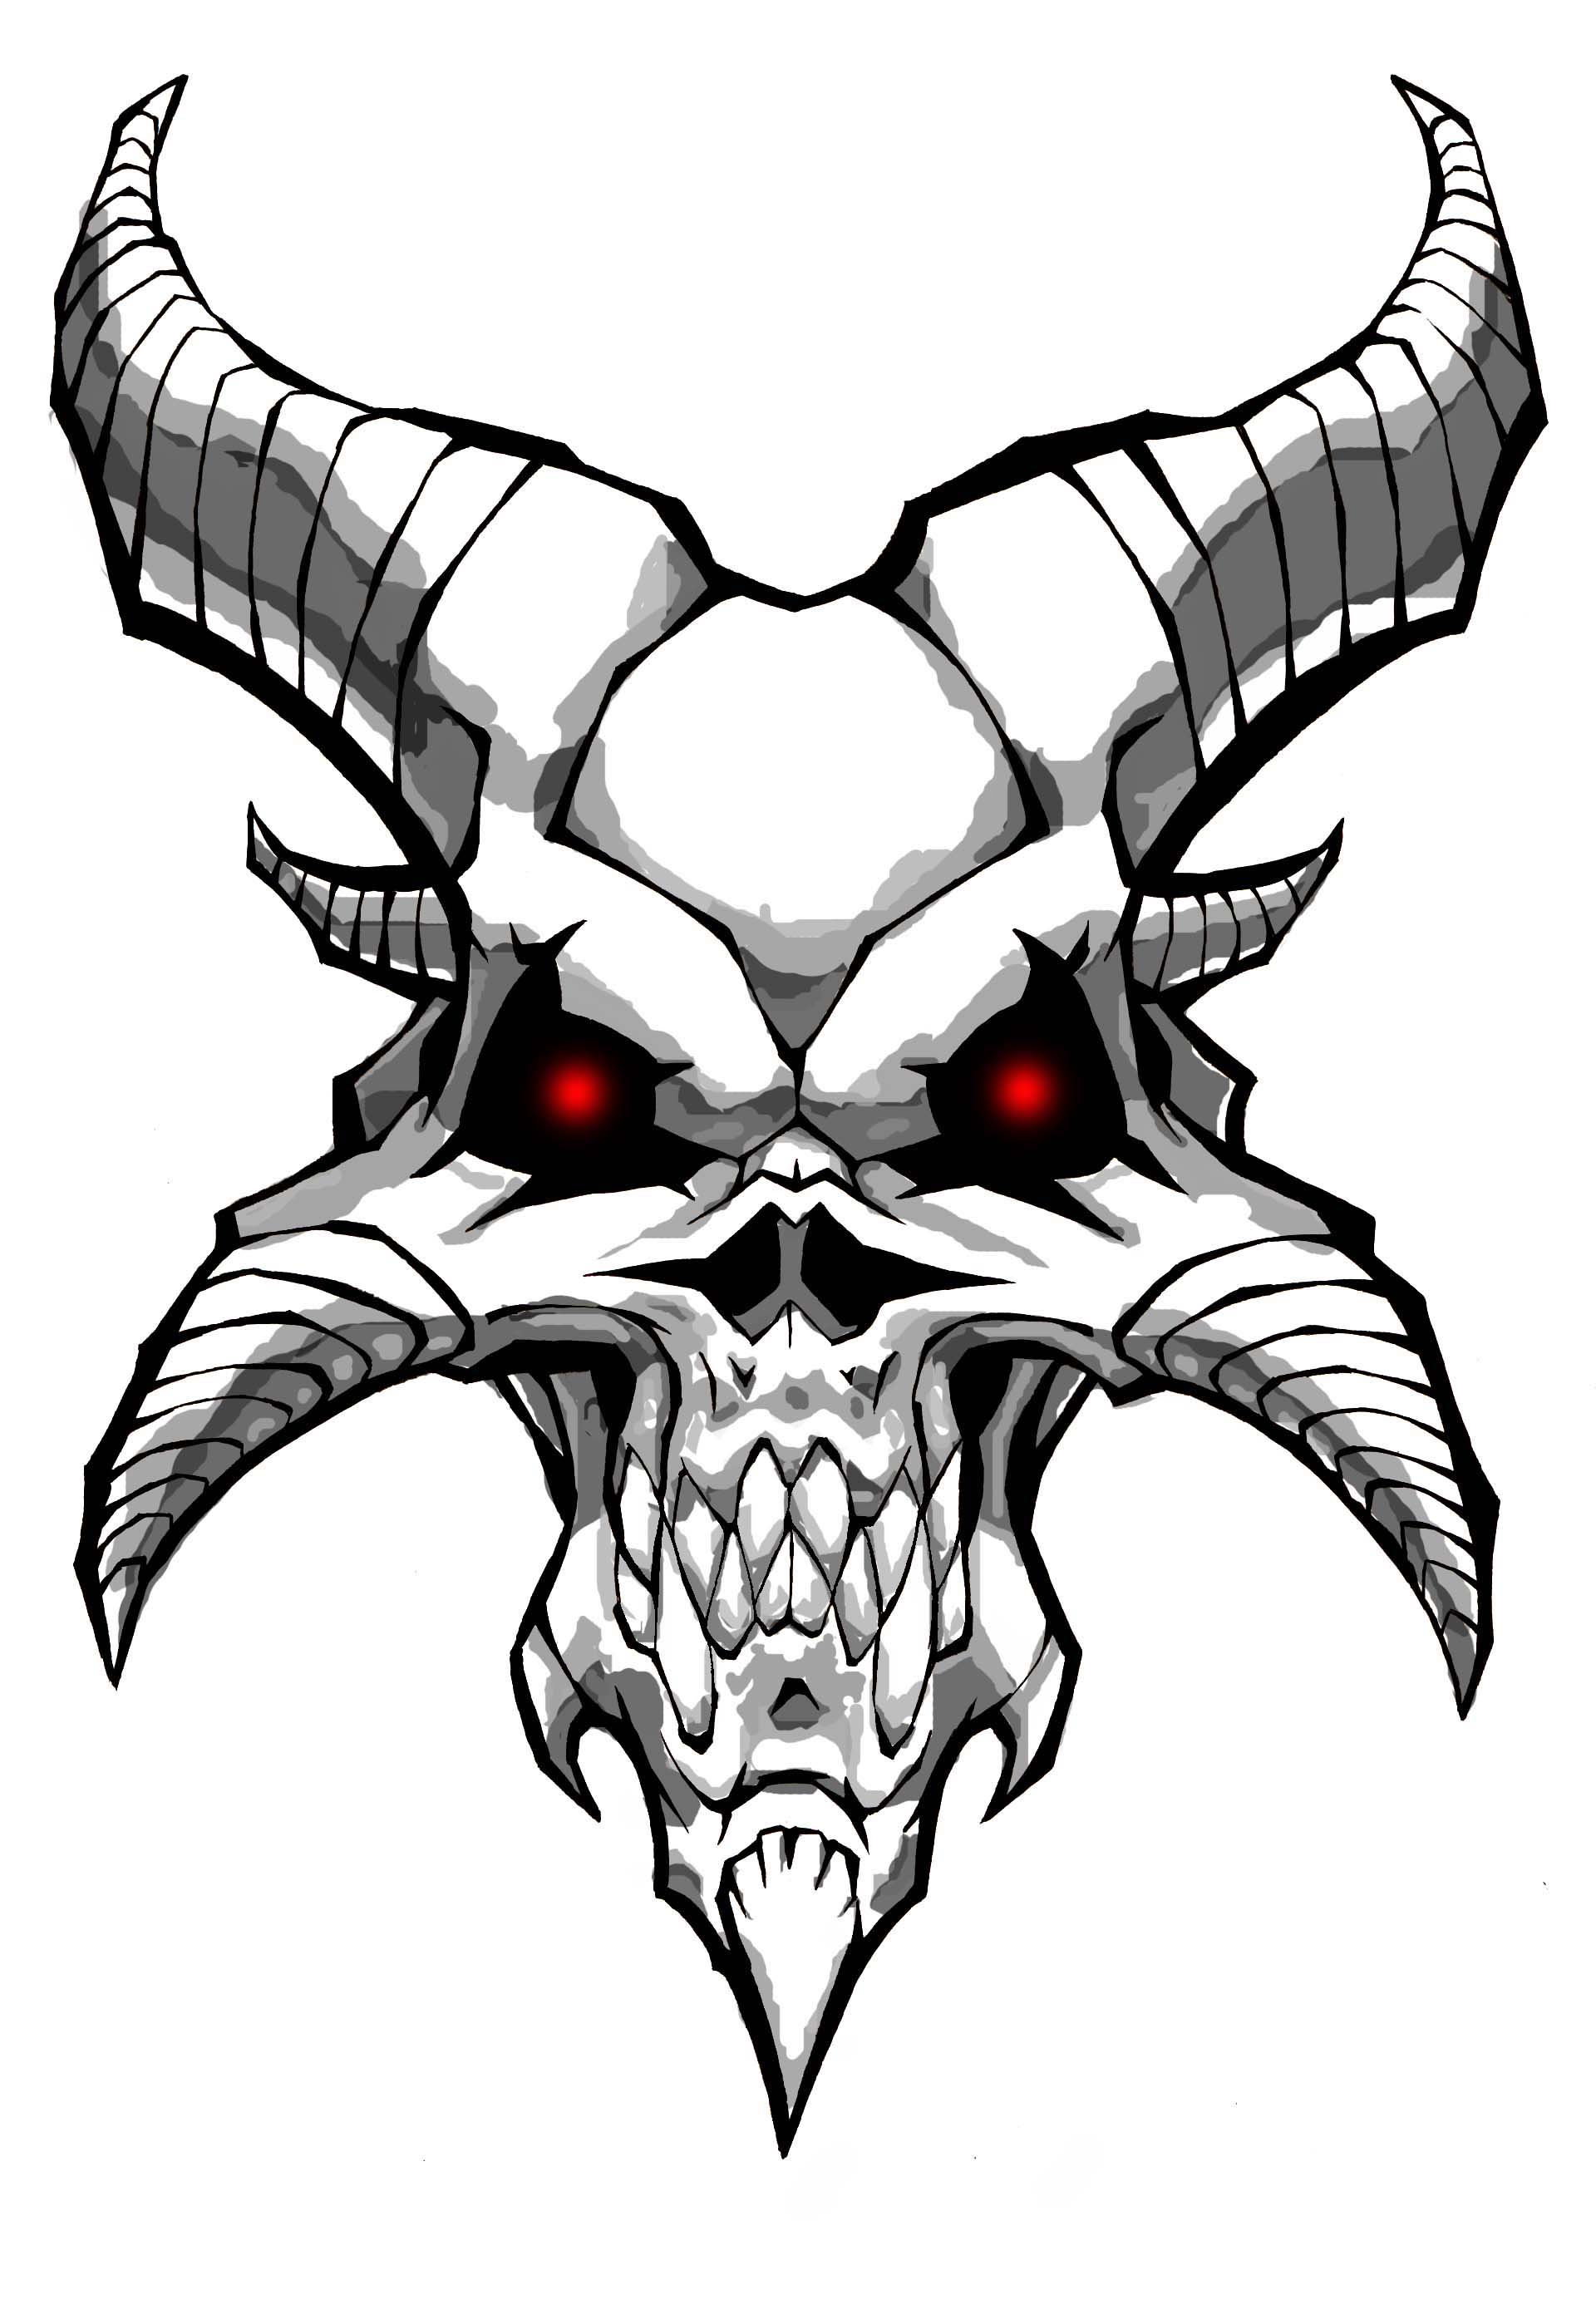 Dragon Skull Drawings - ClipArt Best